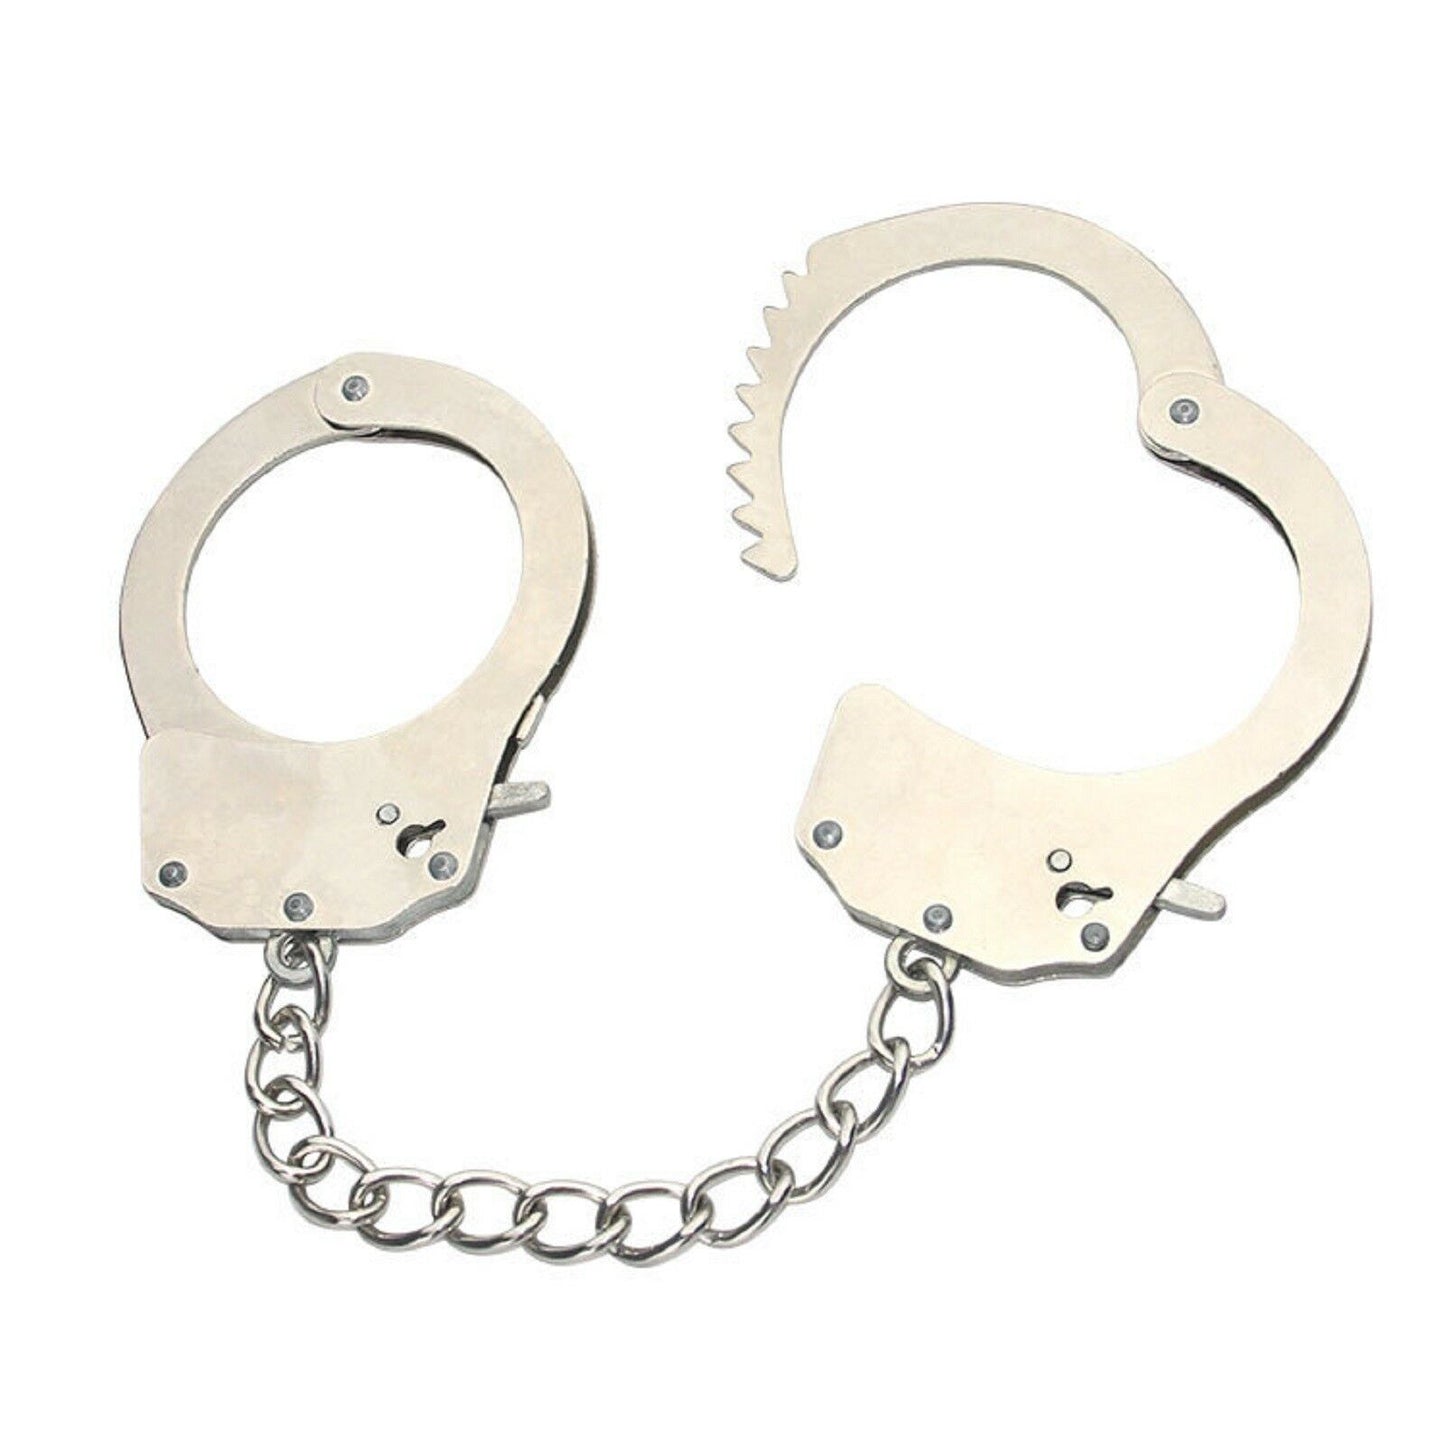 NEW Metal Handcuffs Bondage BDSM Hand Cuffs Sex Toy Fetish Restraint Steel S&M